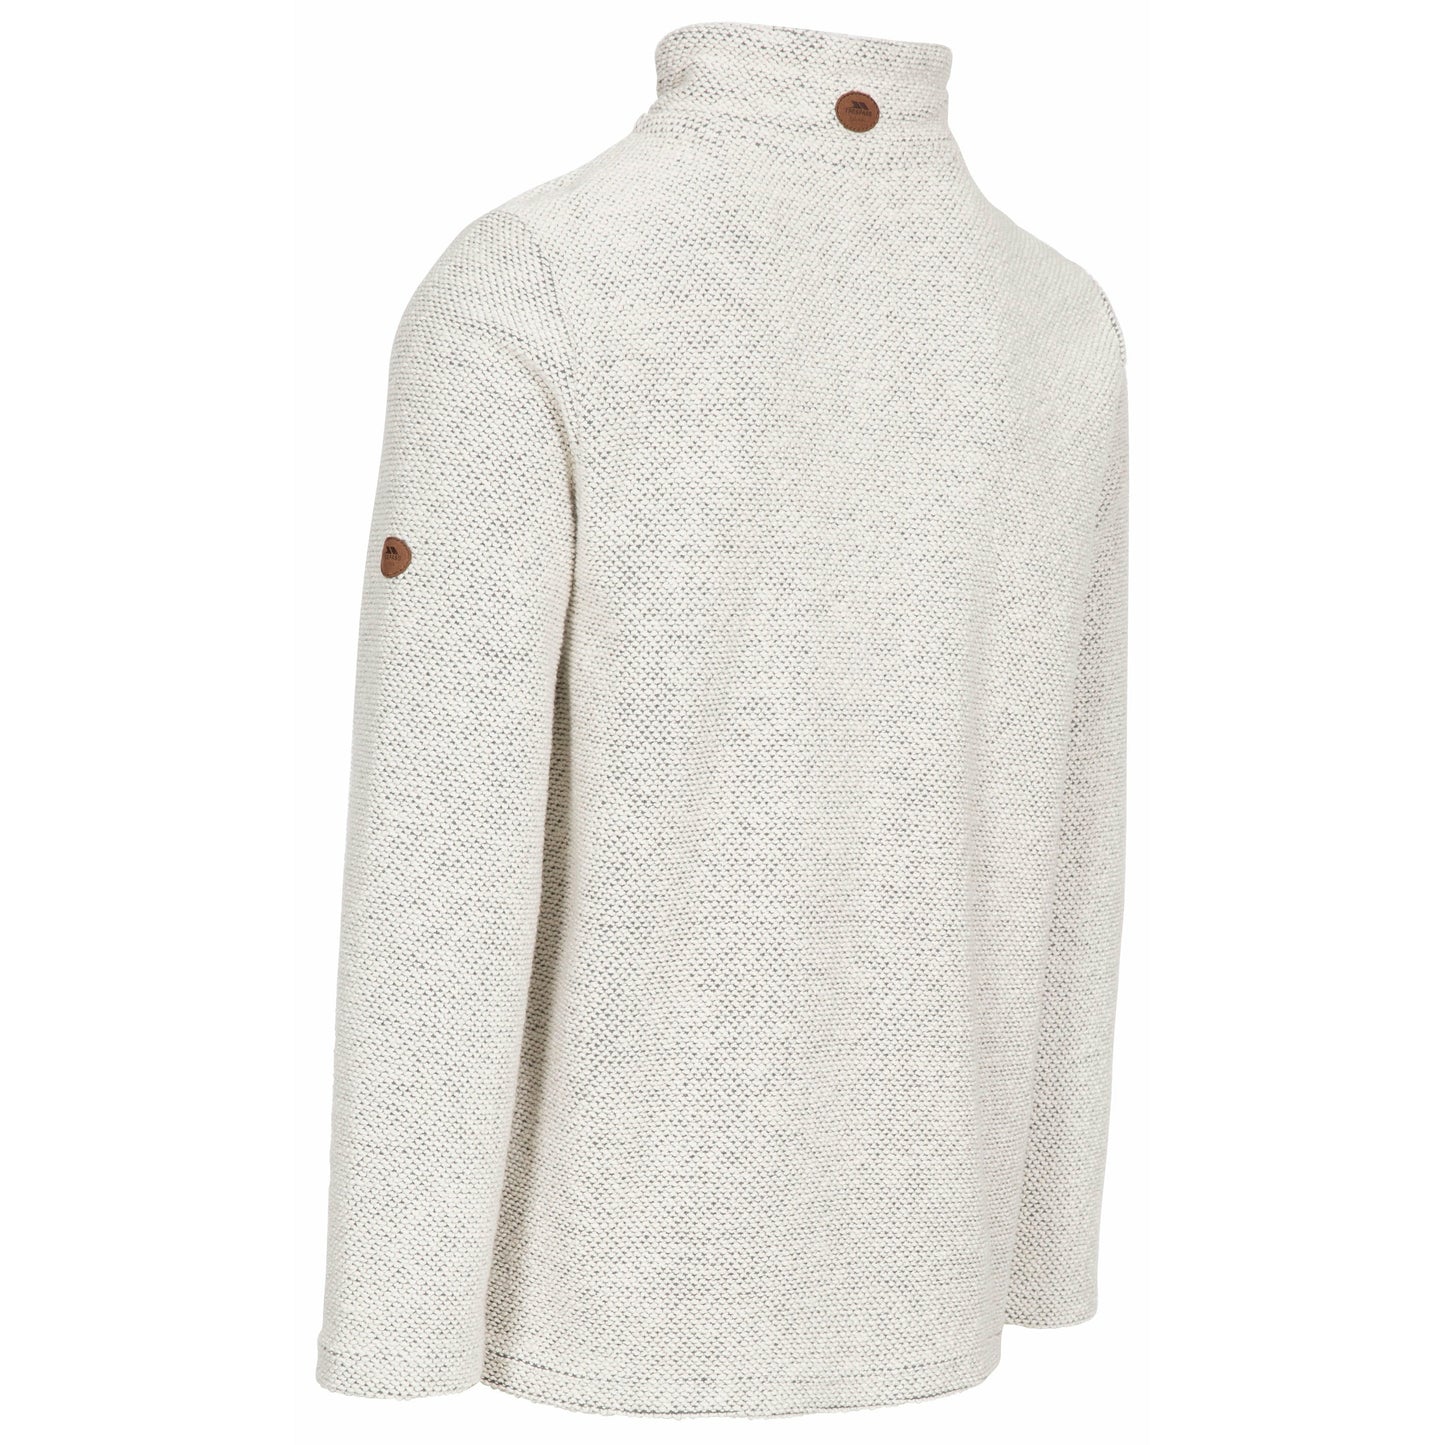 Falmouthfloss - Men's Sweater - Off White